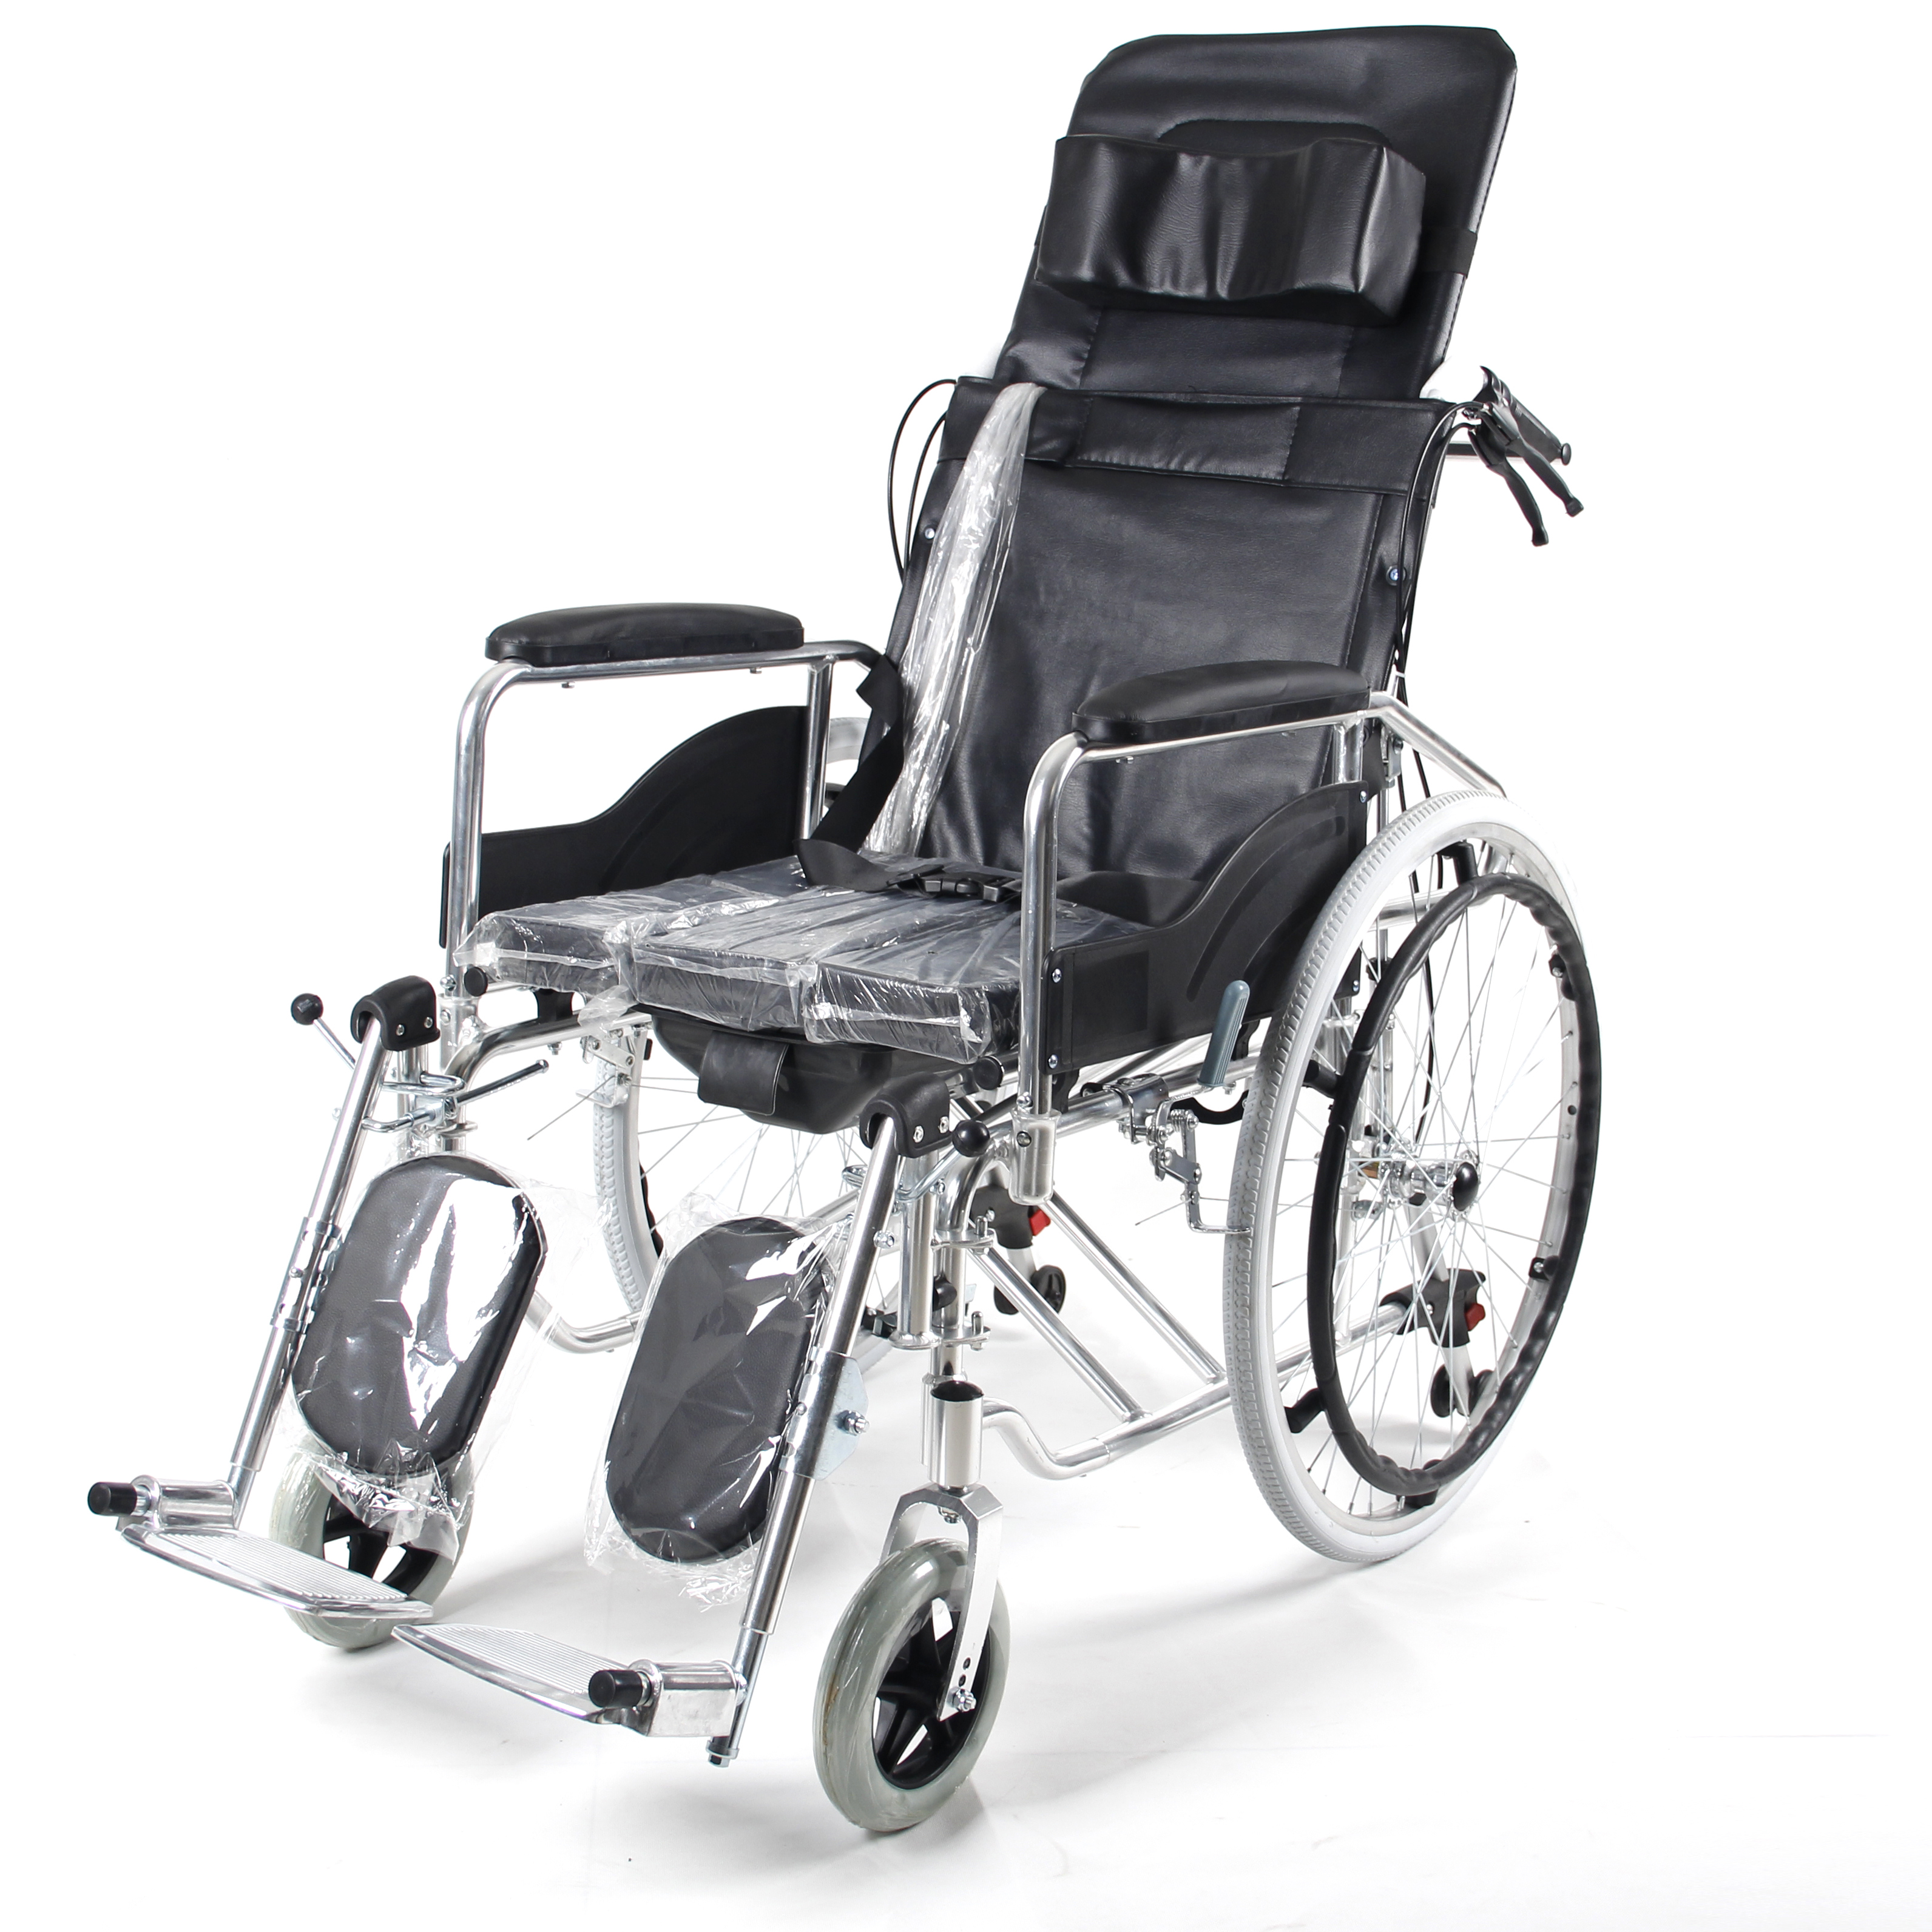 Kupinda multifunctional manual portable wheelchair